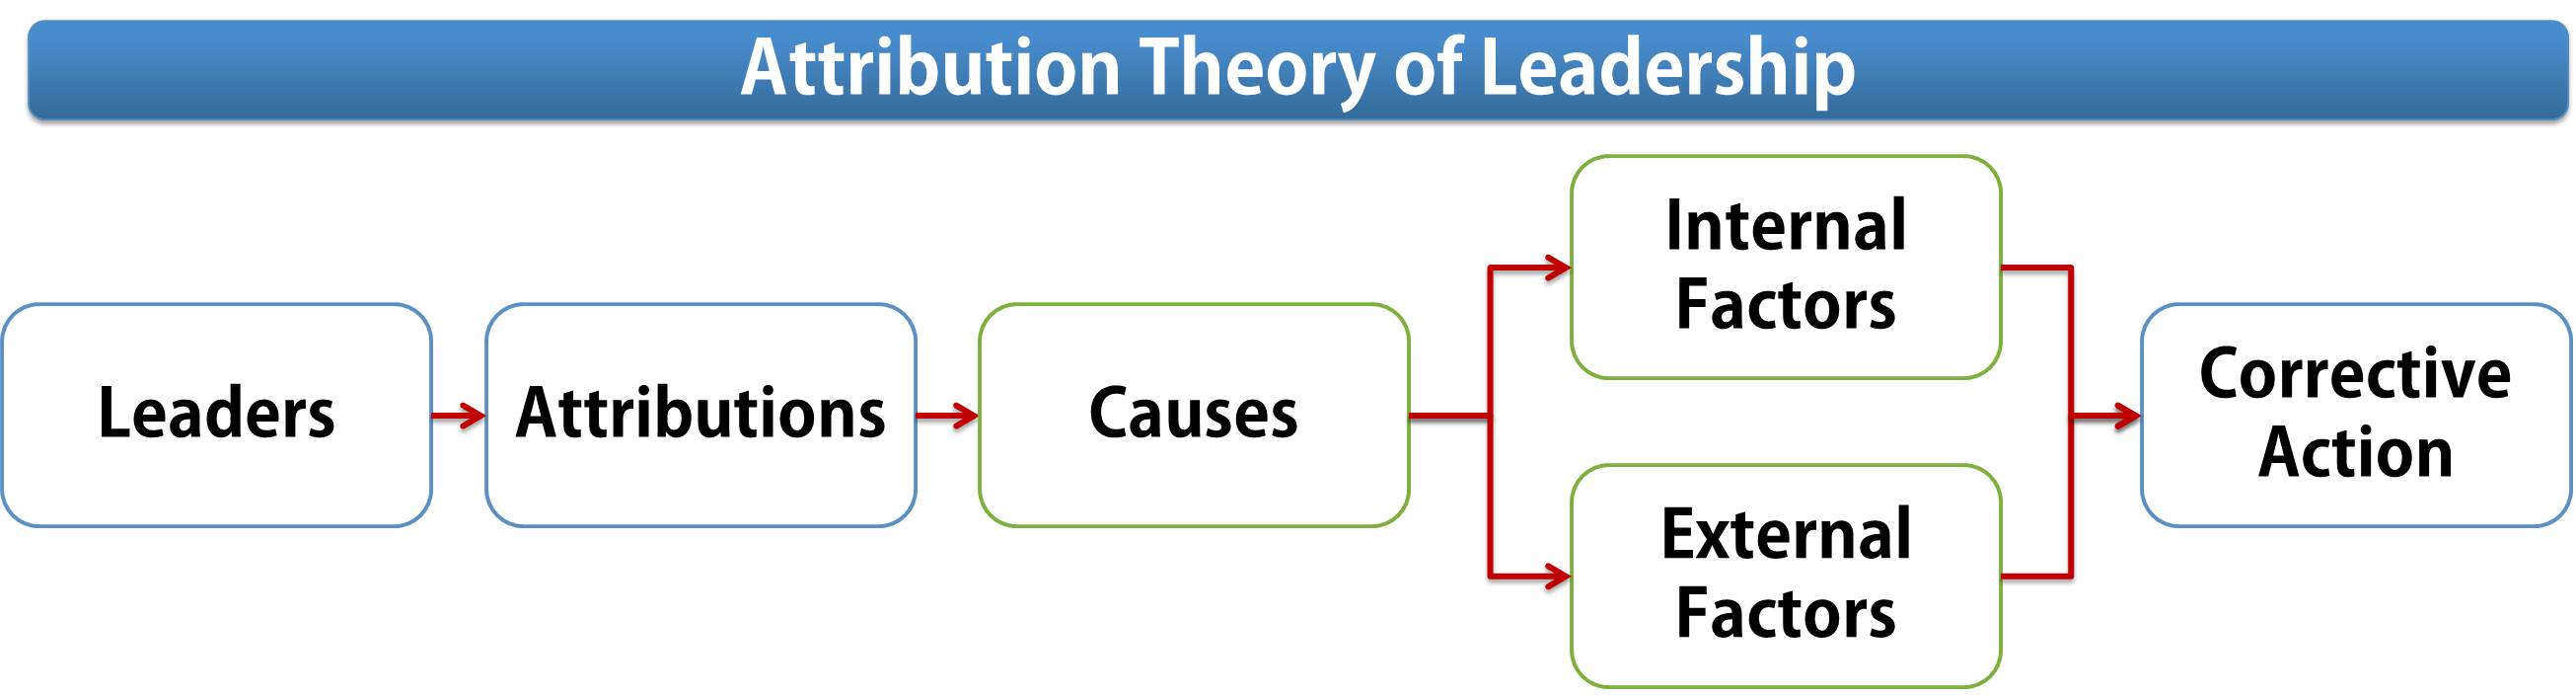 Attribution Theory of Leadership